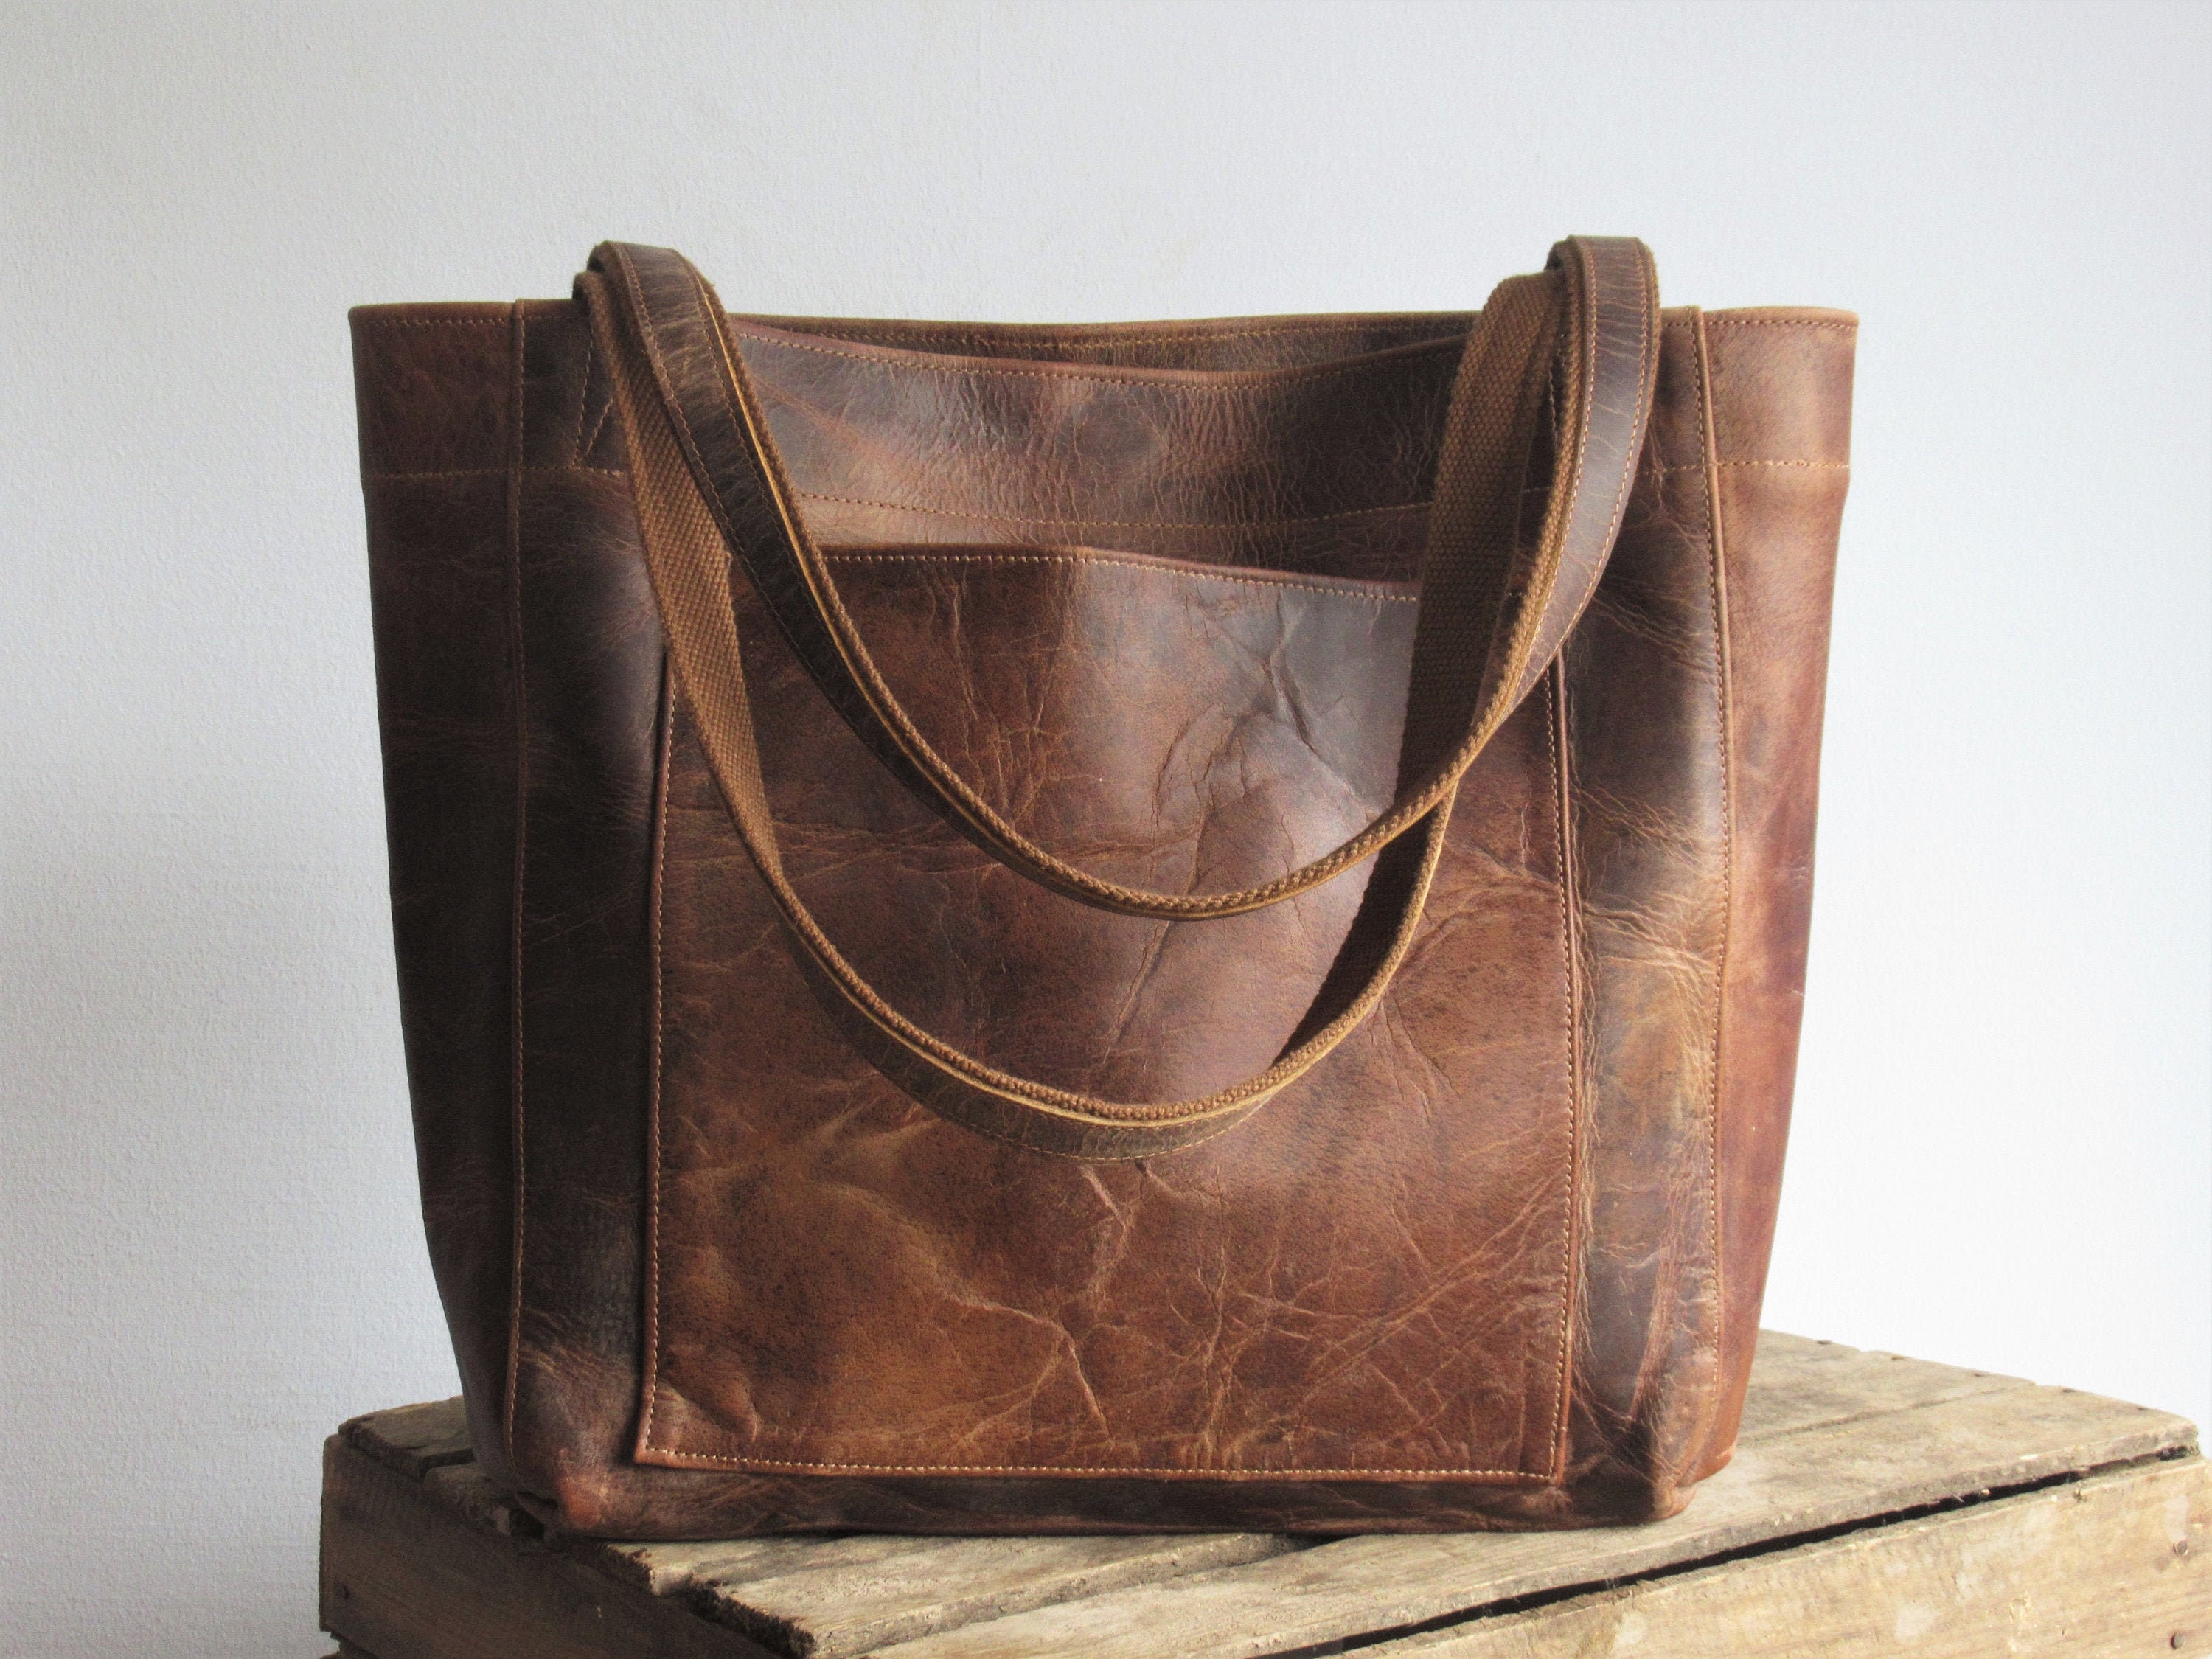 Givenchy Pandora Bag Purse Distressed Leather | eBay